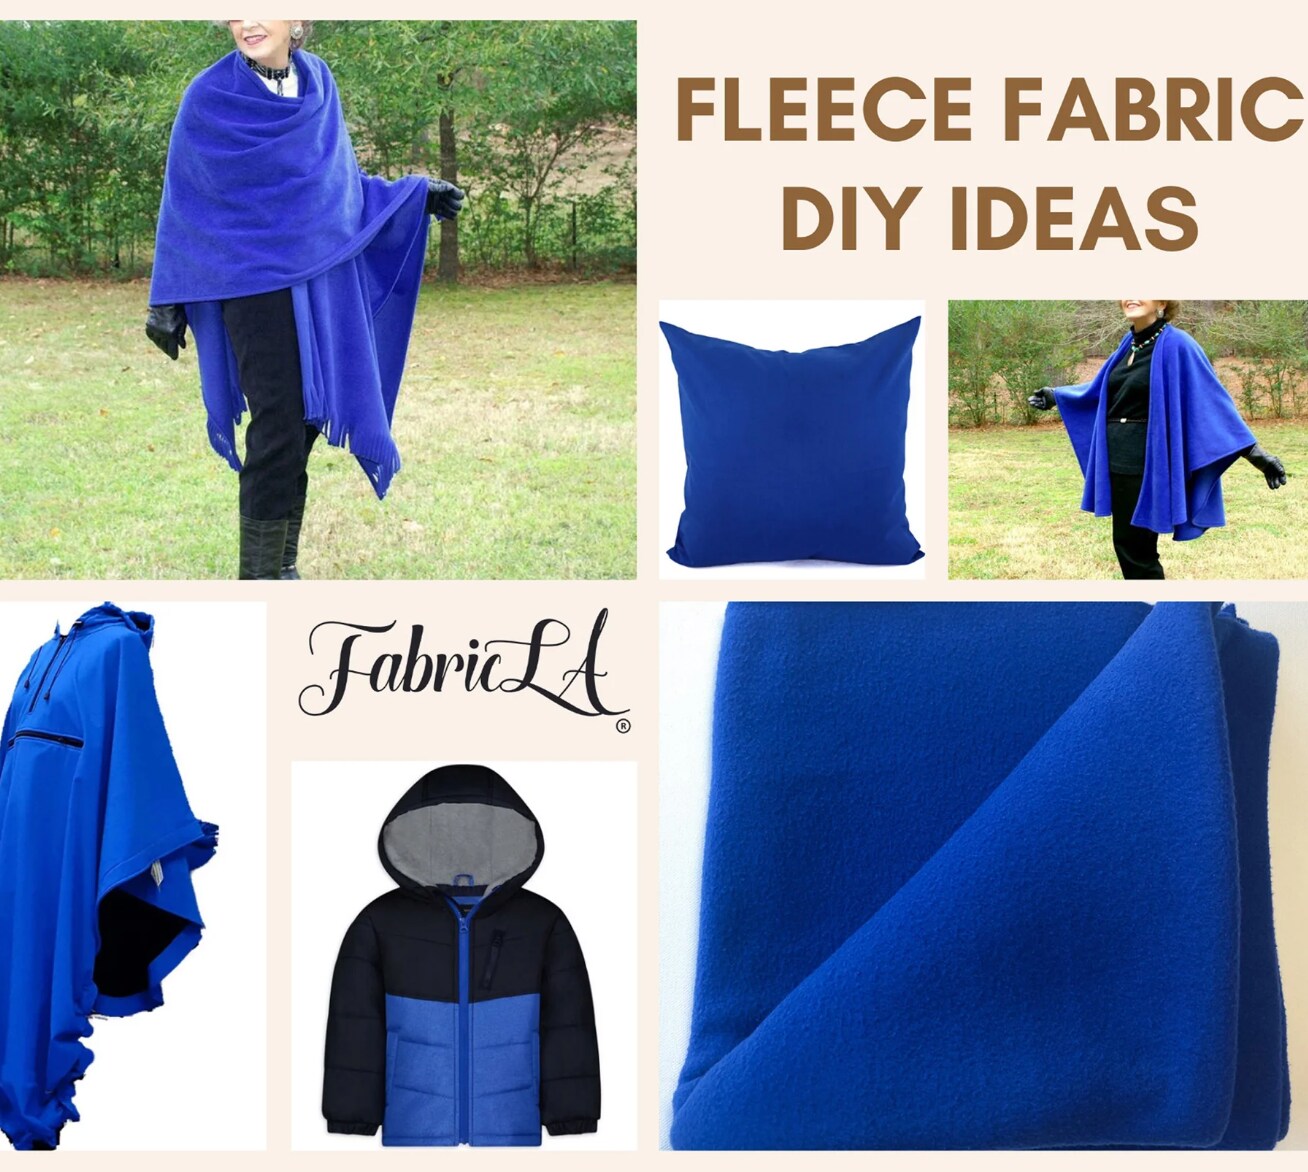 FabricLA | Fleece Fabric By The Yard | 72&#x22;X60&#x22; Inch Wide | Anti Pill Polar Fleece | Soft, Blanket, Throw, Poncho, Pillow Cover, PJ Pants, Booties, Eye Mask - Royal Blue (2 Yard)